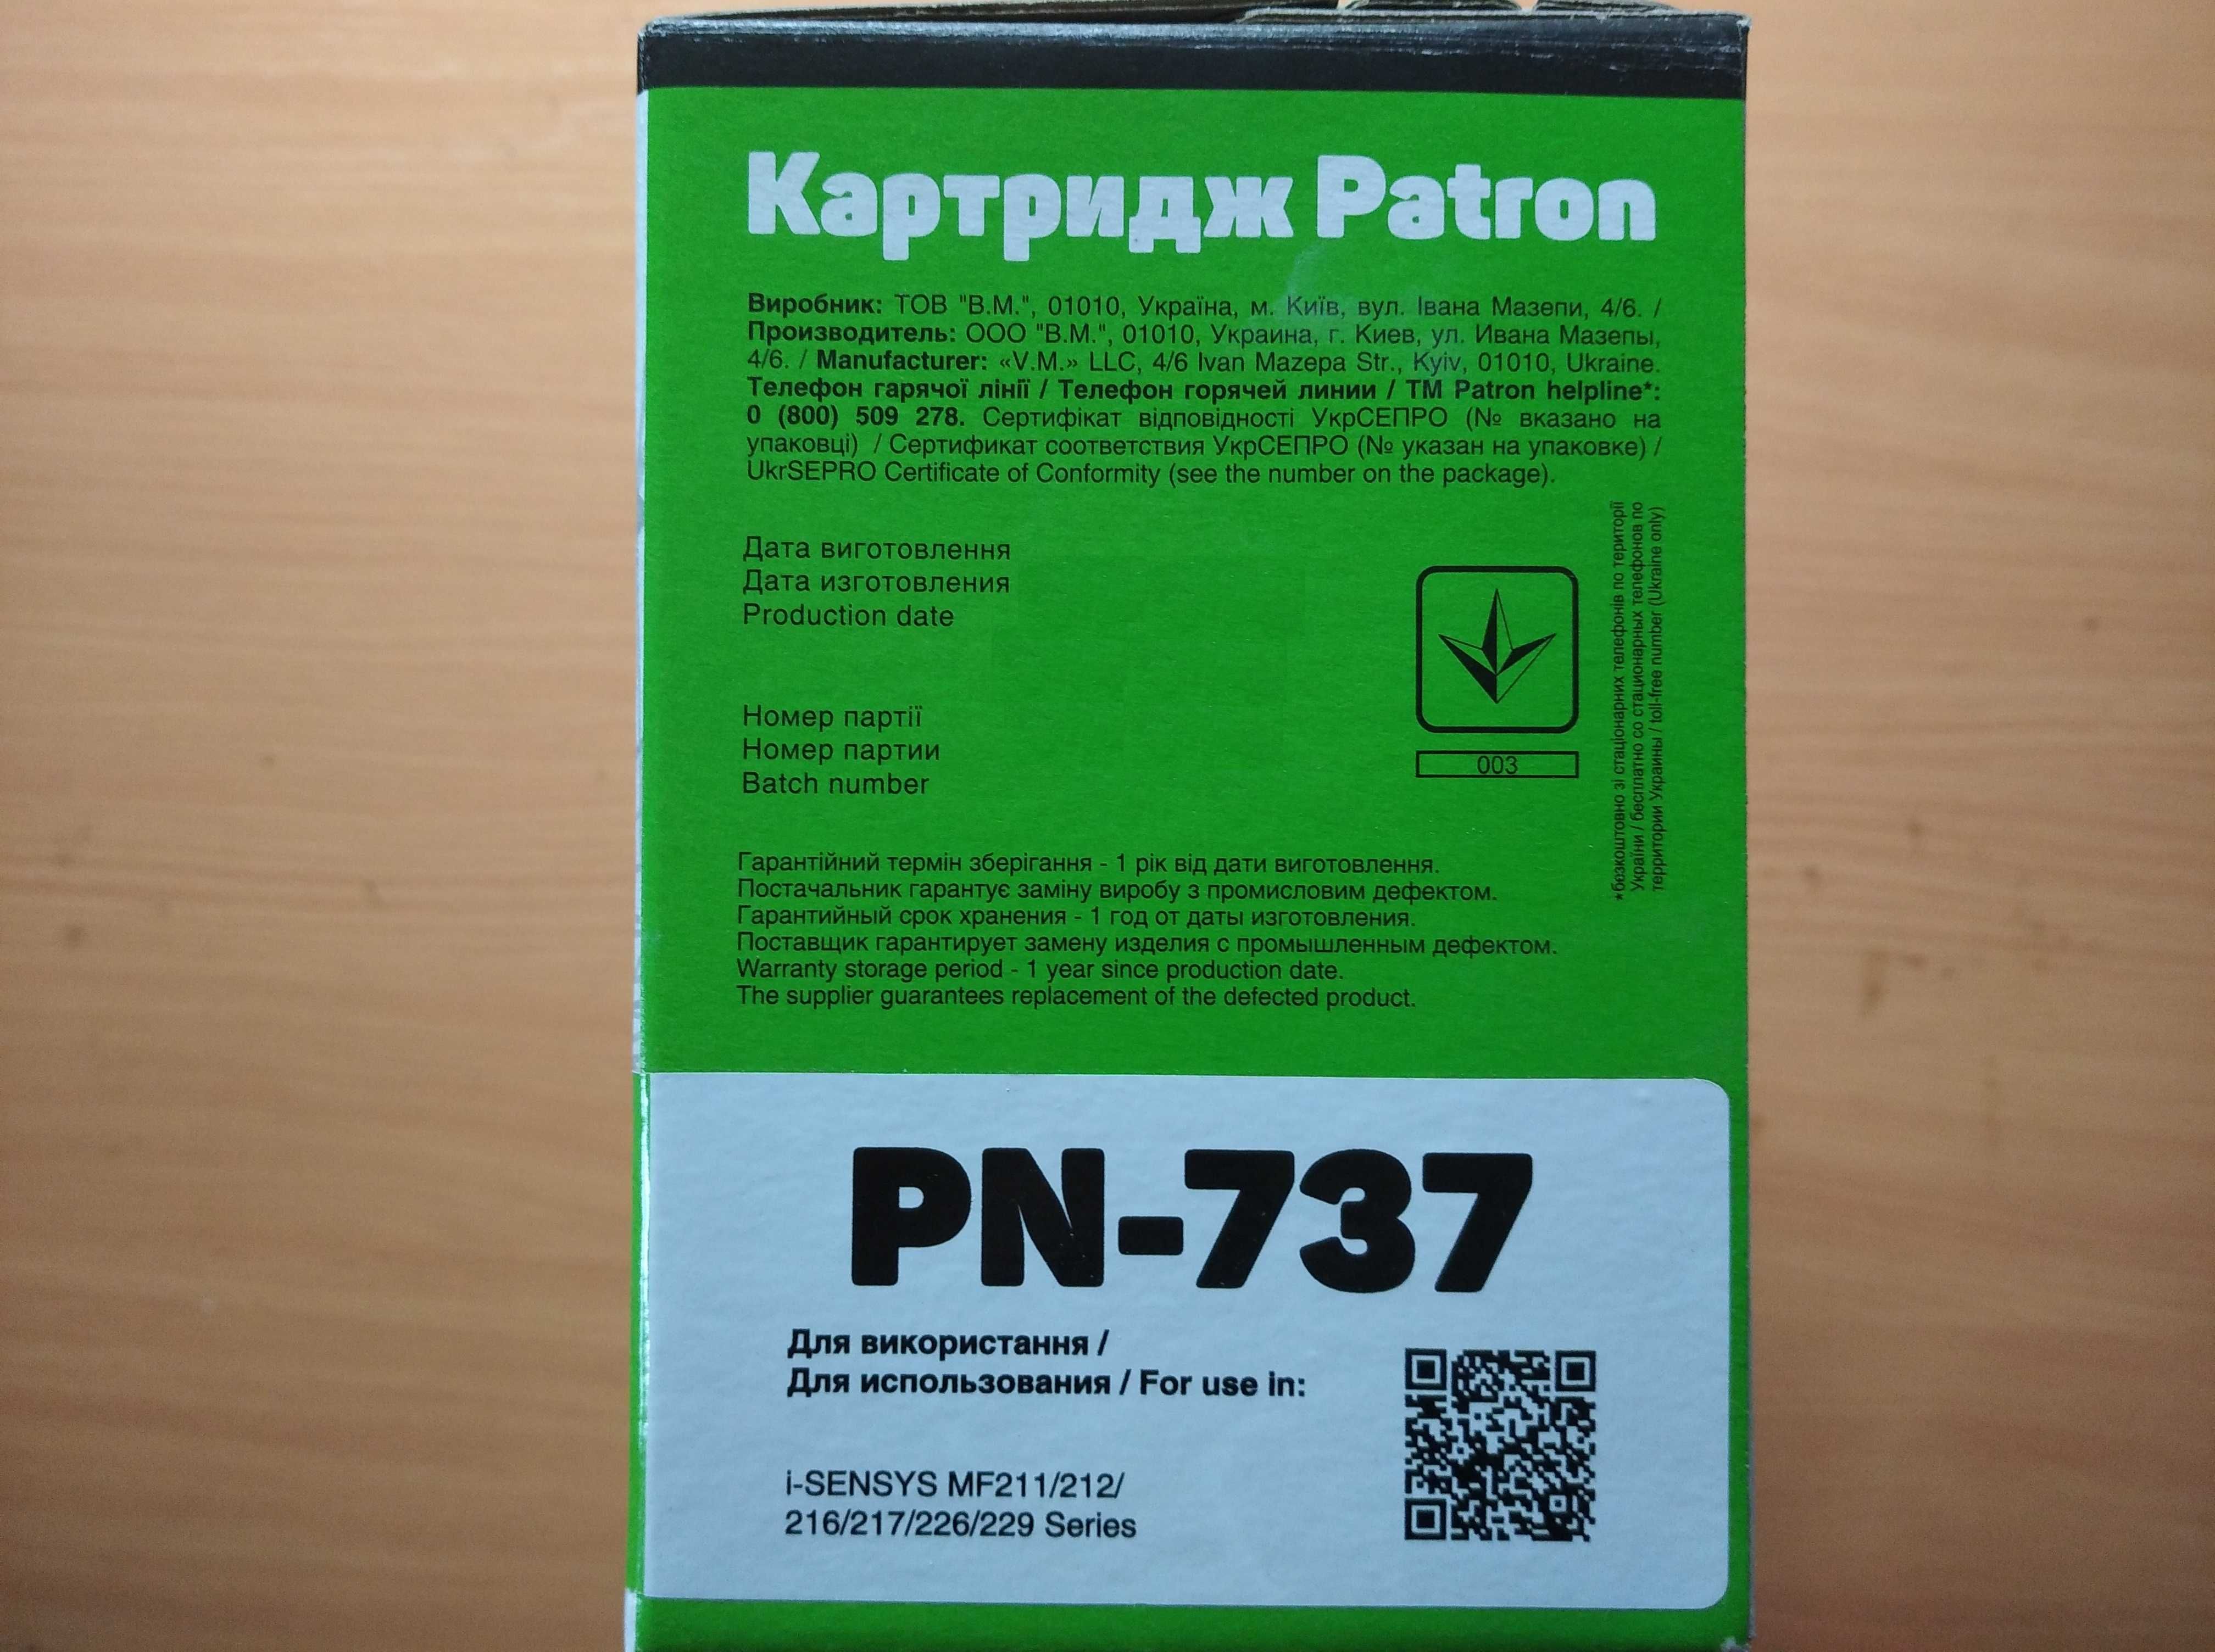 Картридж Patron PN-737 GL Canon 737, MF211/212/216/217/226/229 Black